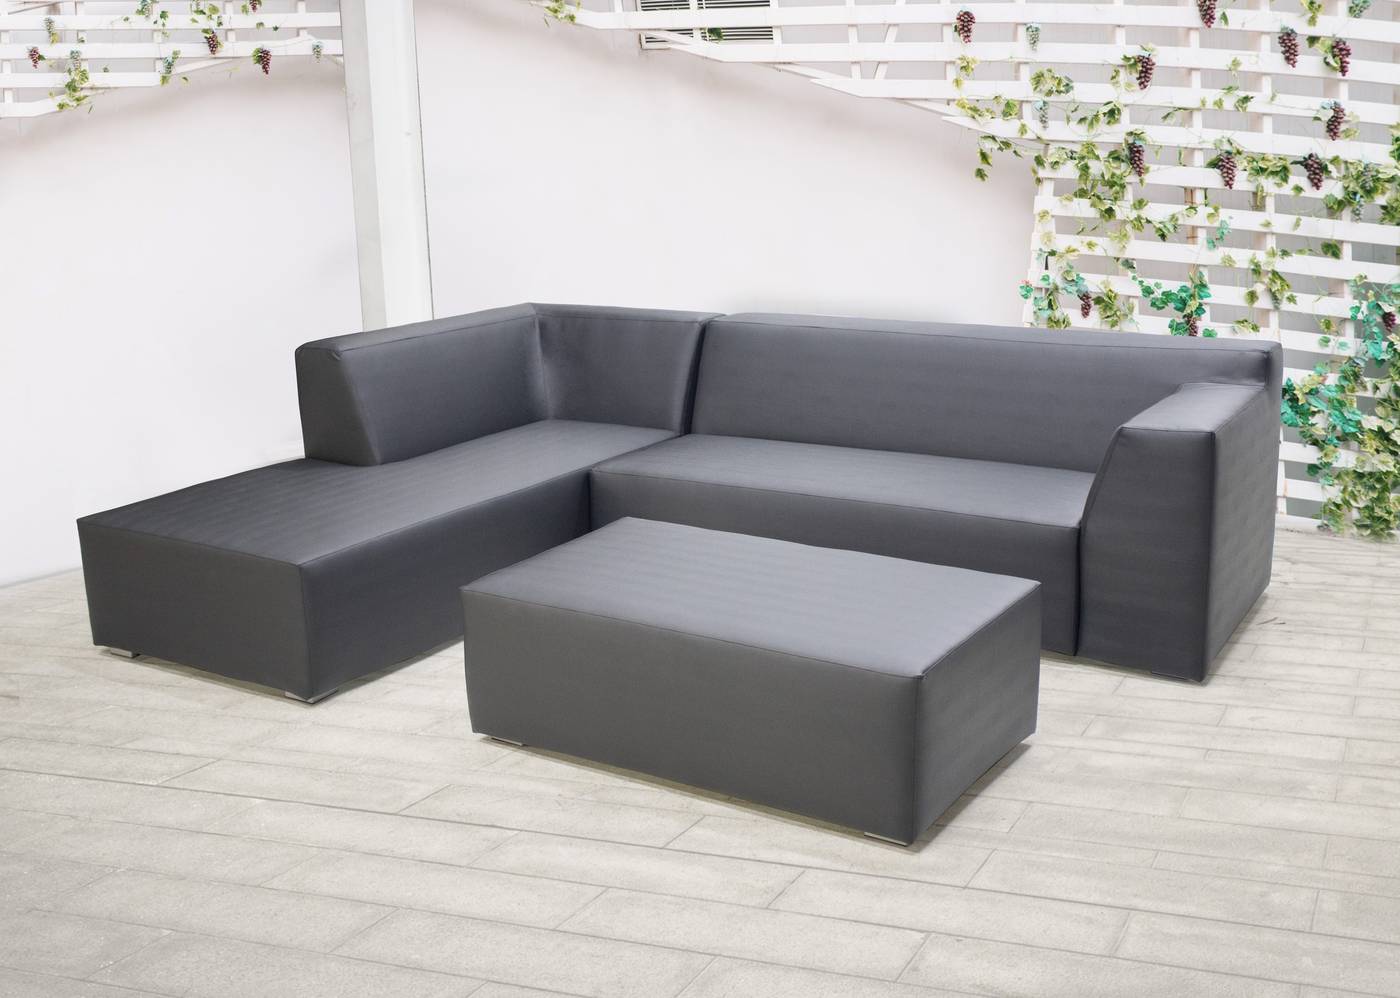 Lujoso conjunto de aluminio tapizado con piel nautica o premiun: Chaiselonge + sofá 2/3 plazas + mesa de centro.